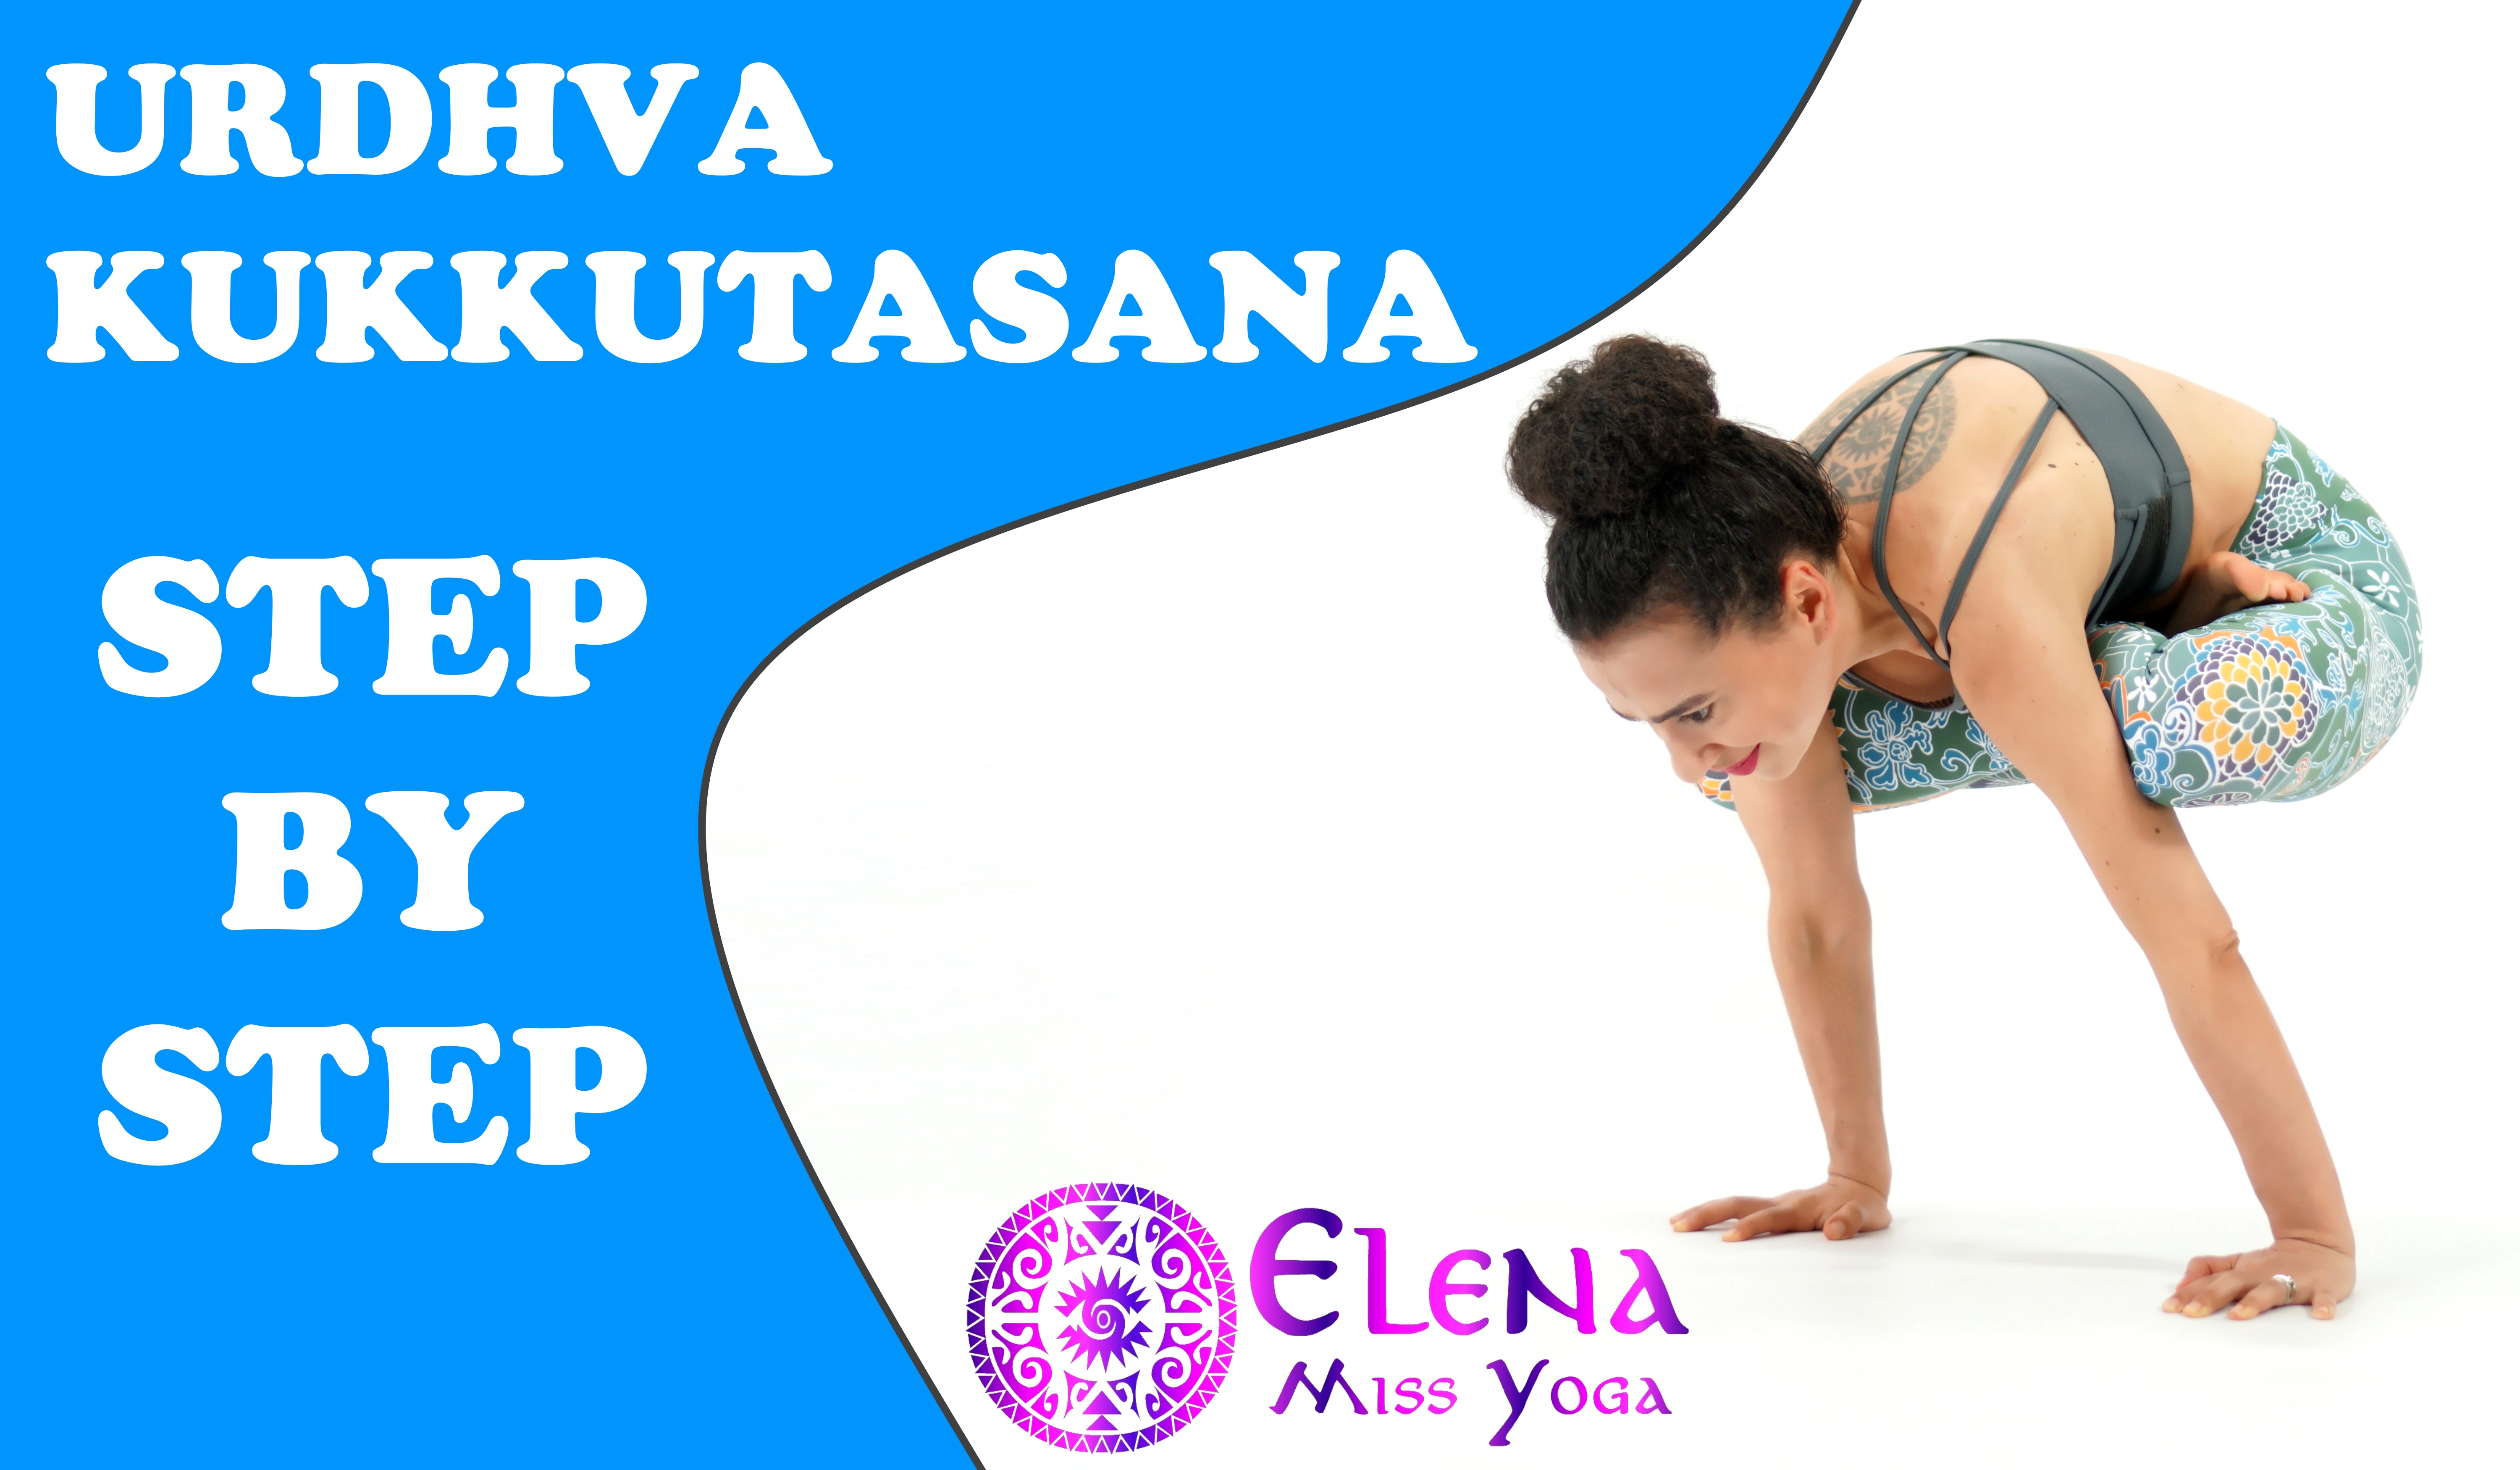 YOGA TUTORIAL: HOW TO URDHVA KUKKUTASANA, UPWARD ROOSTER POSE STEP BY STEP